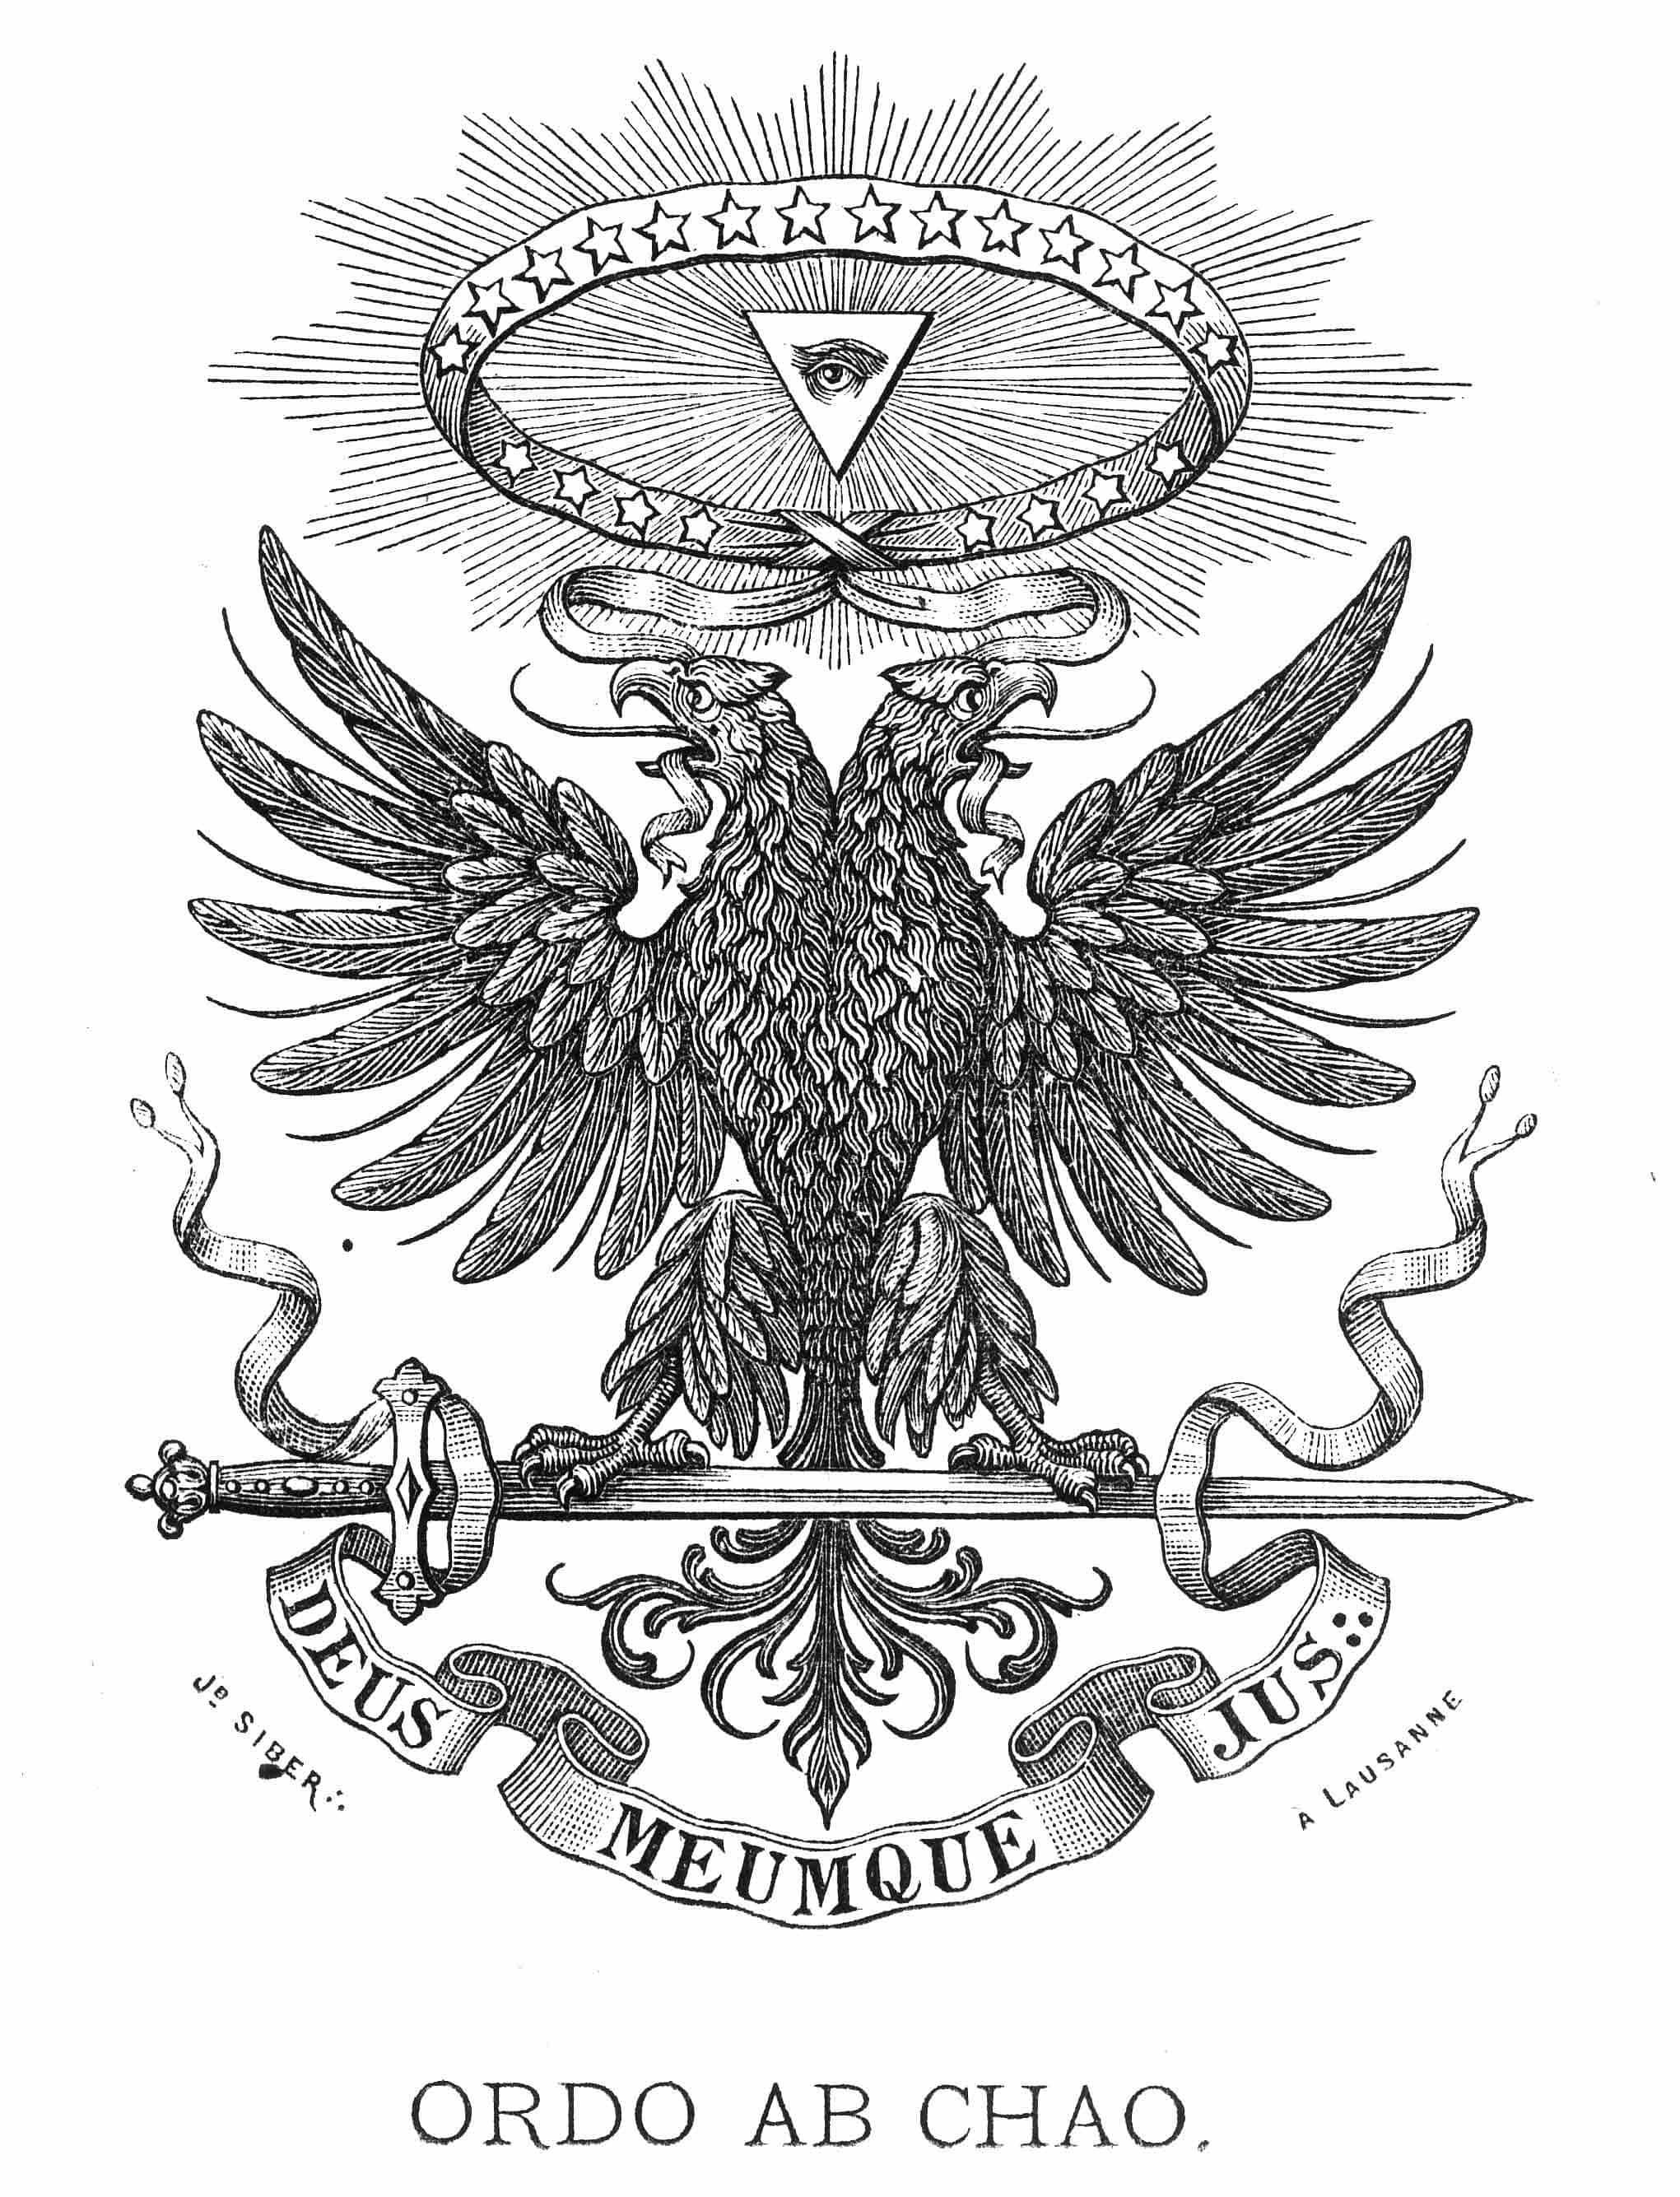 order out of chaos freemasonry - Royal Arch Masons of England